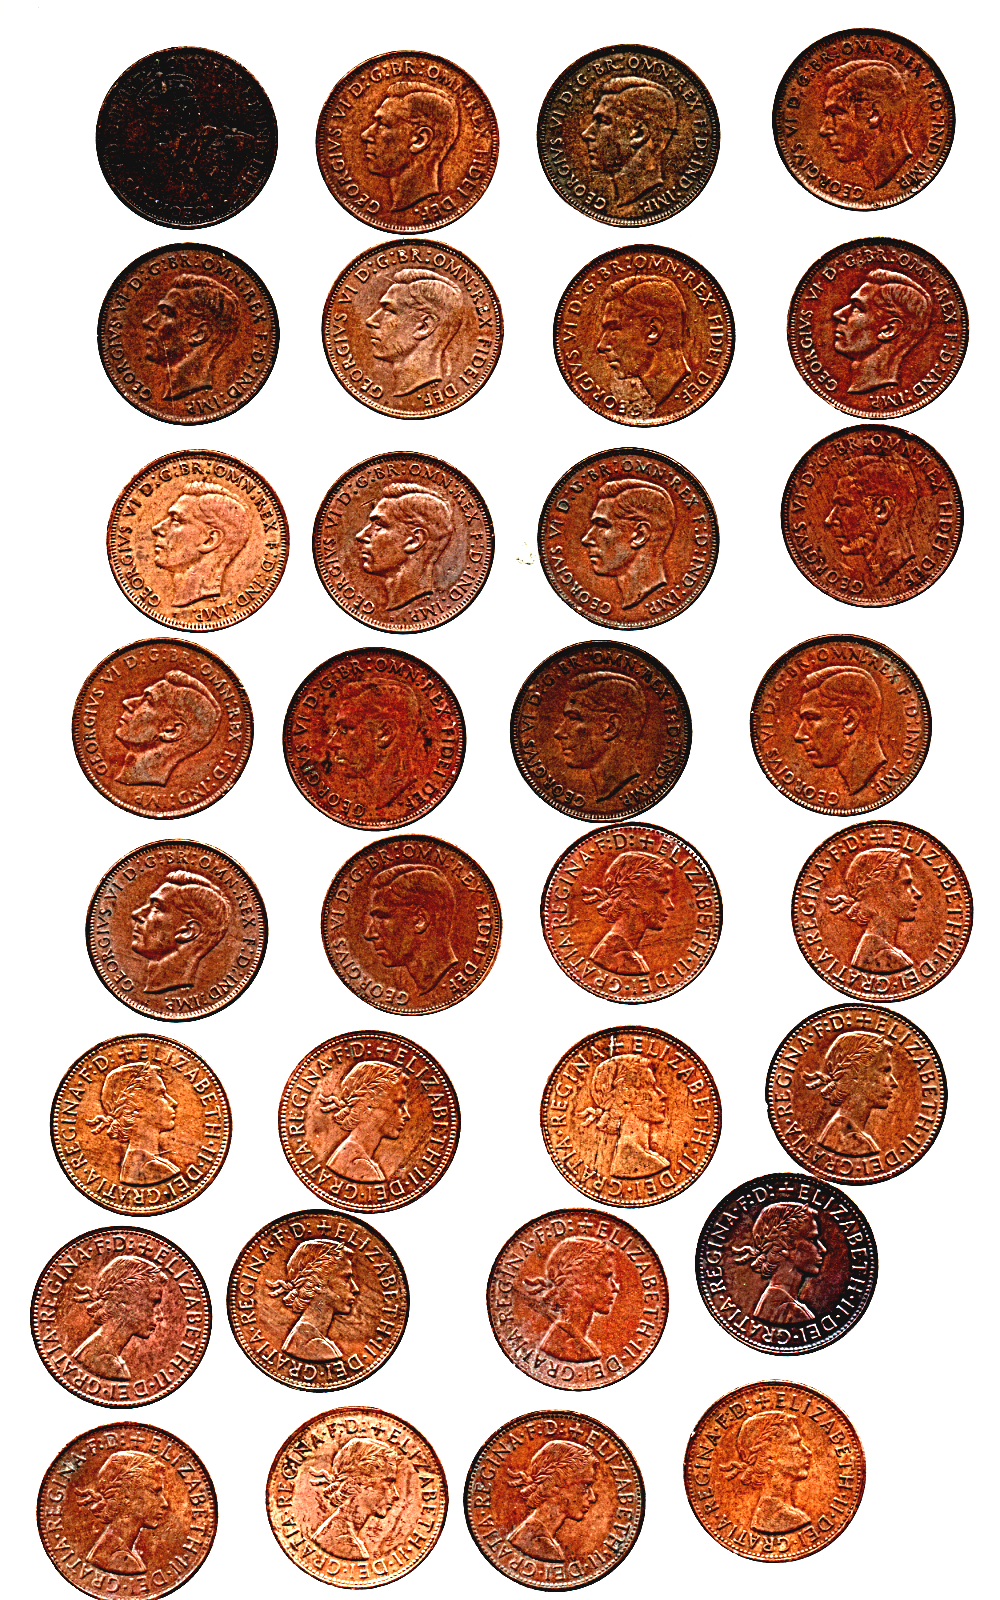 Australia - One Penny, 32 Coins